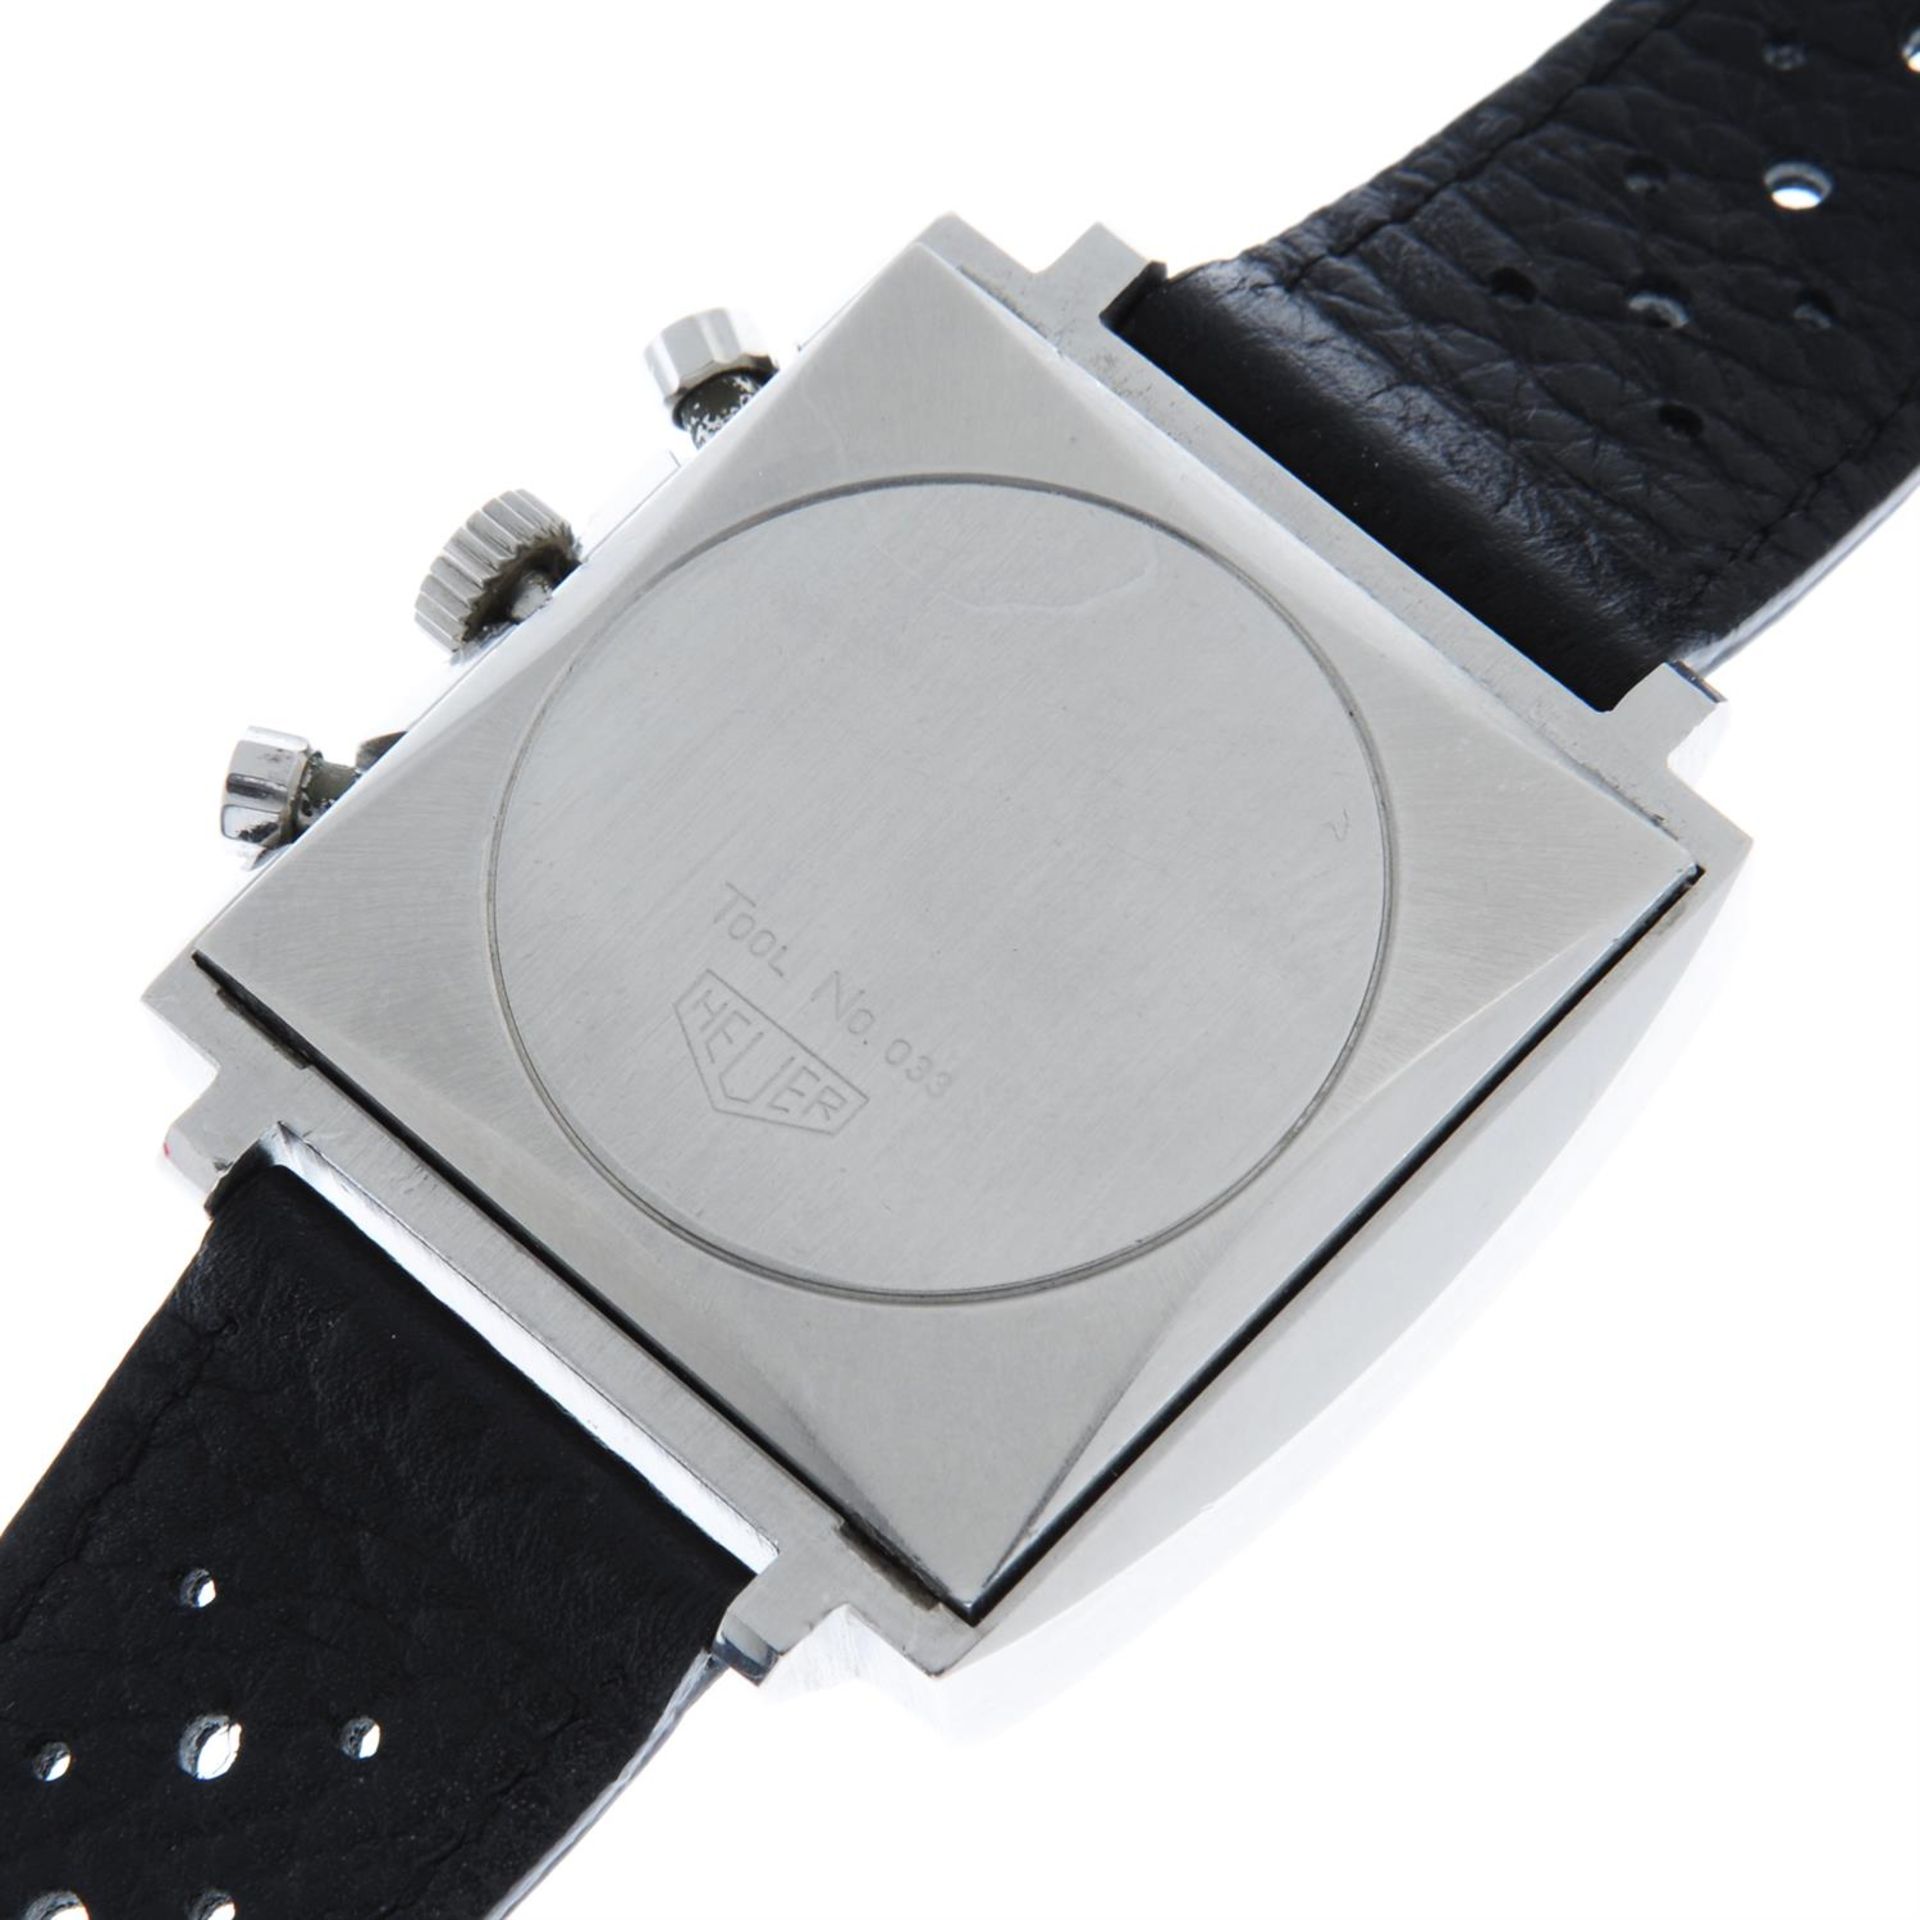 Heuer - a Monaco chronograph watch, 39mm. - Image 5 of 6